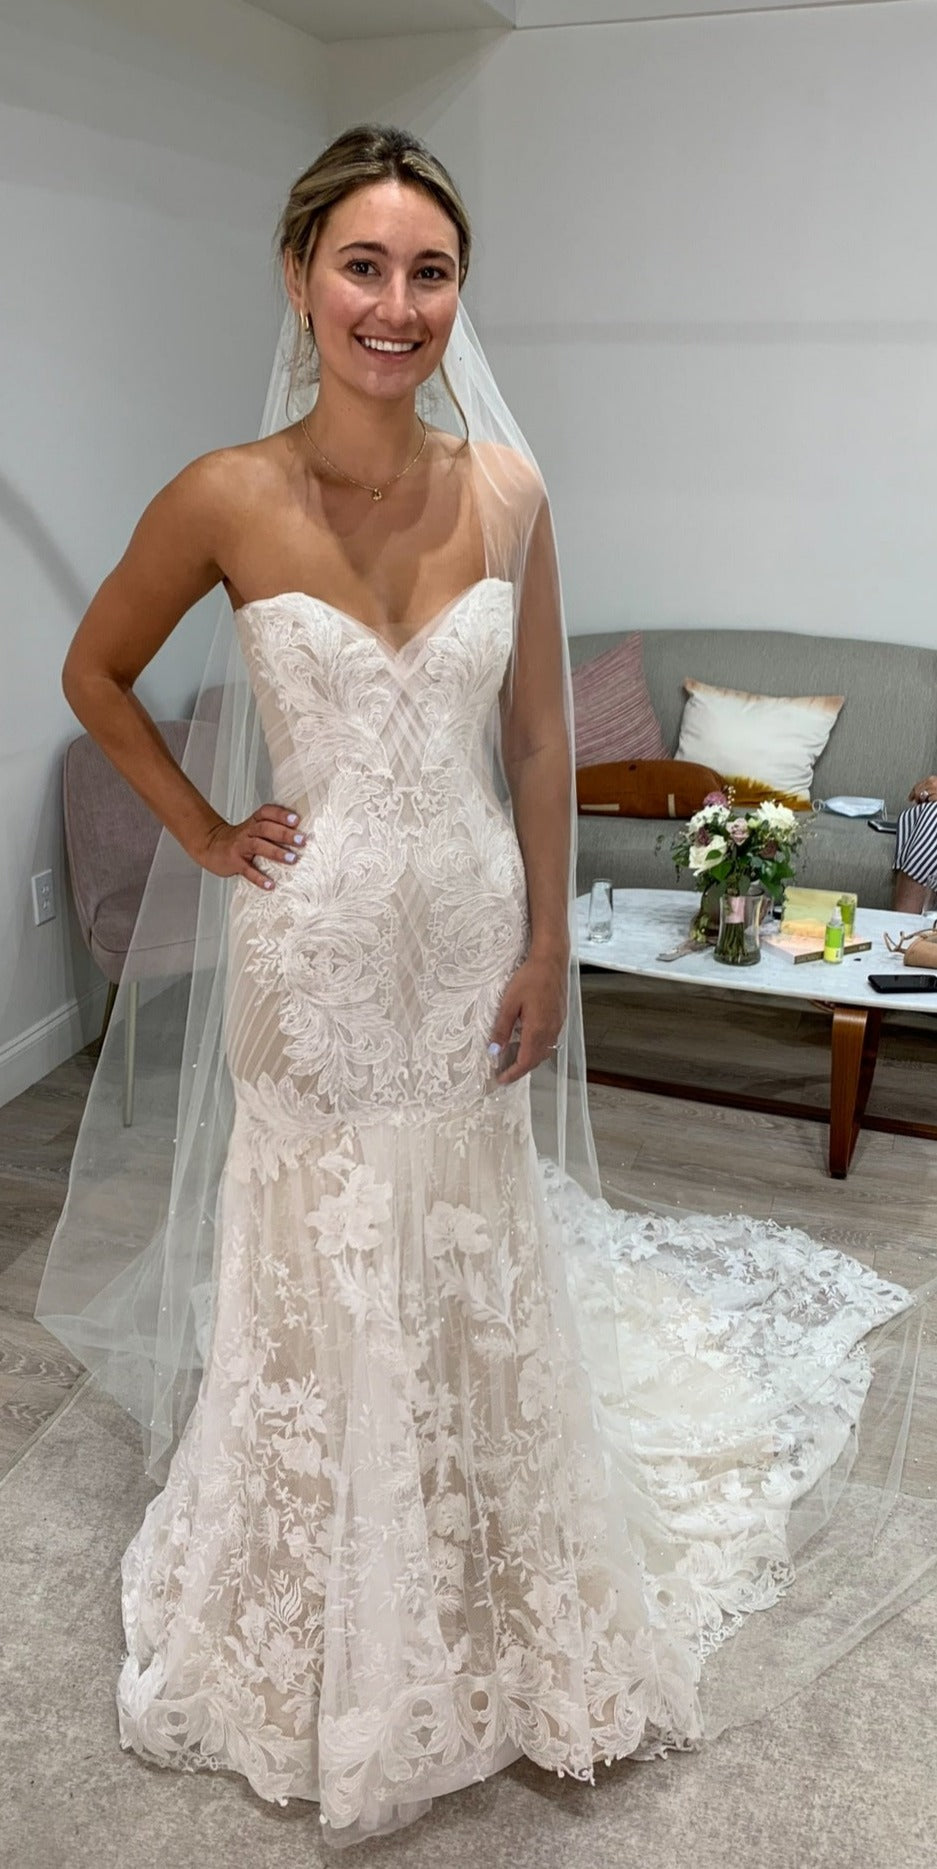 Ines Di Santo 'Annette' wedding dress size-04 NEW